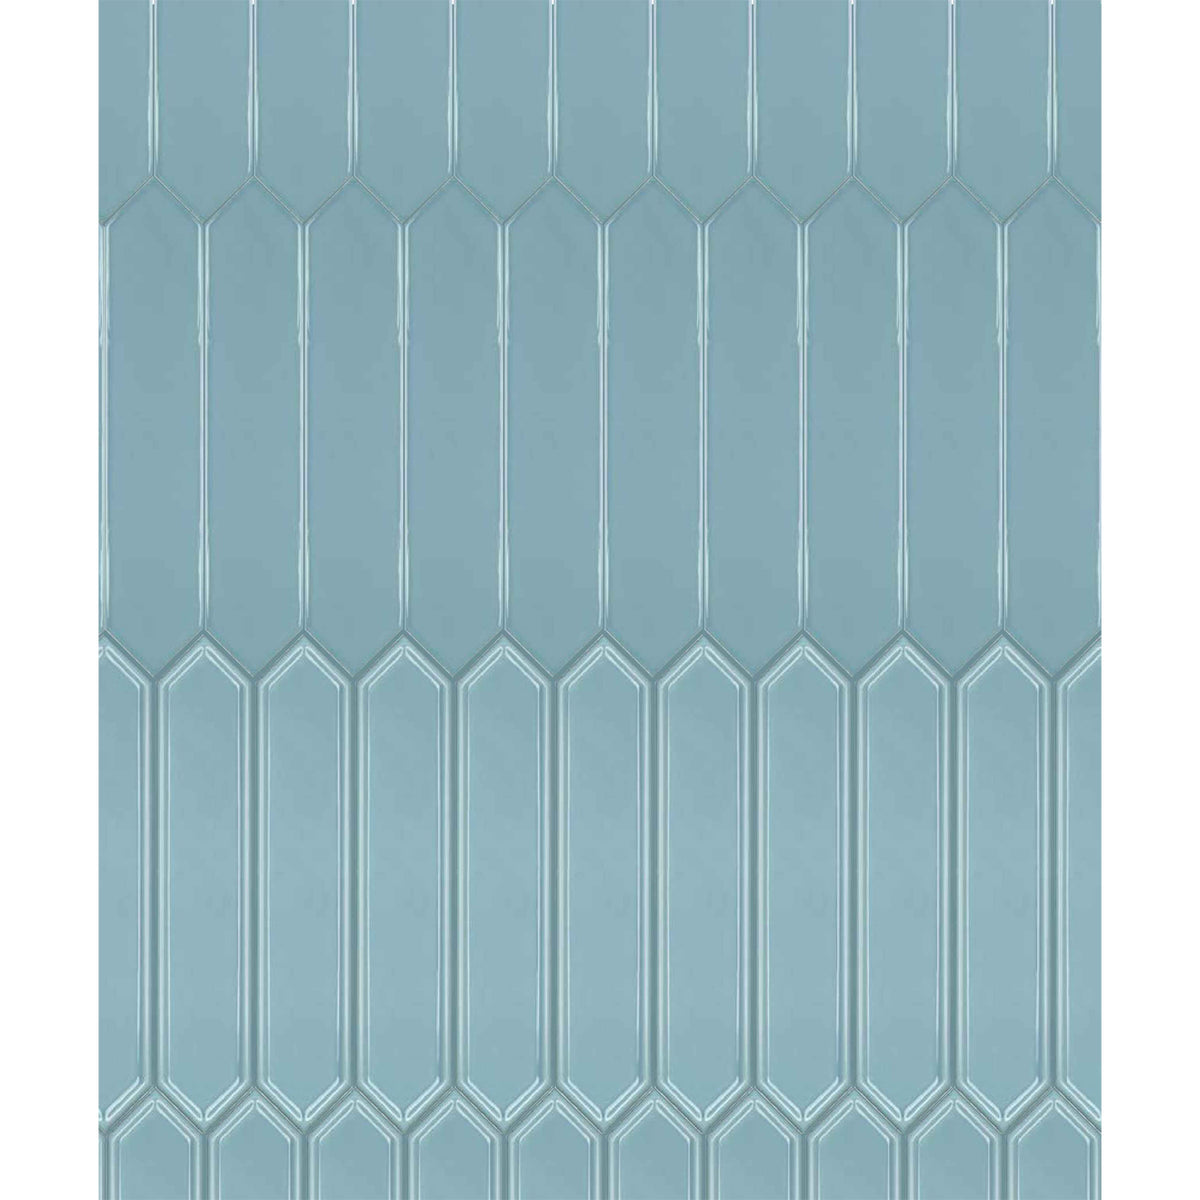 Topcu - Naima - 2.5 in. x 12 in. Ceramic Wall Tile - Ocean